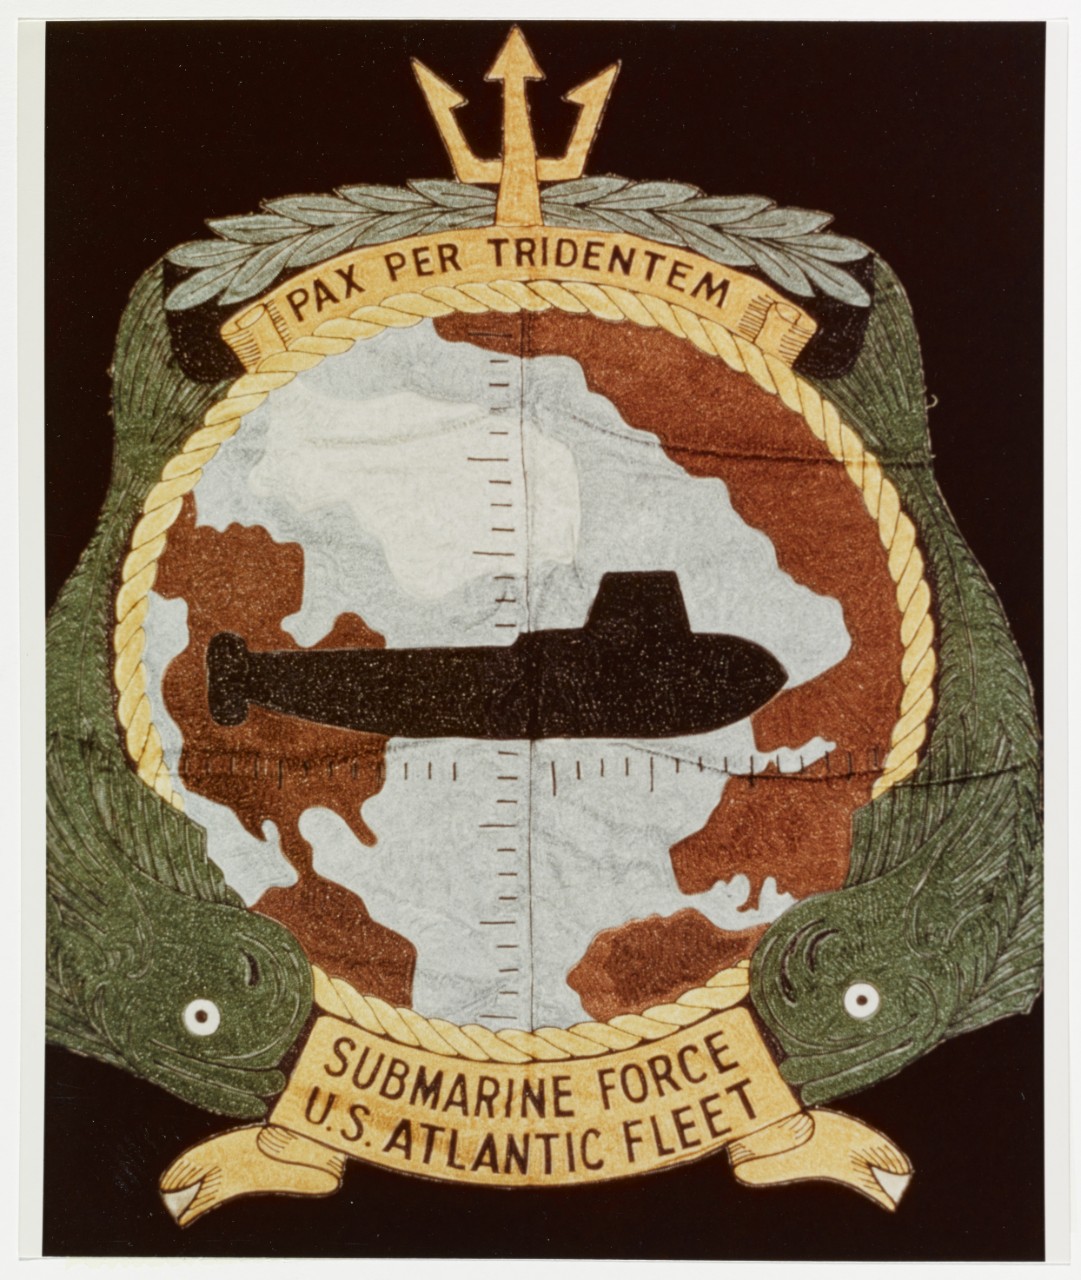 Insignia: Submarine Force, U.S. Atlantic Fleet